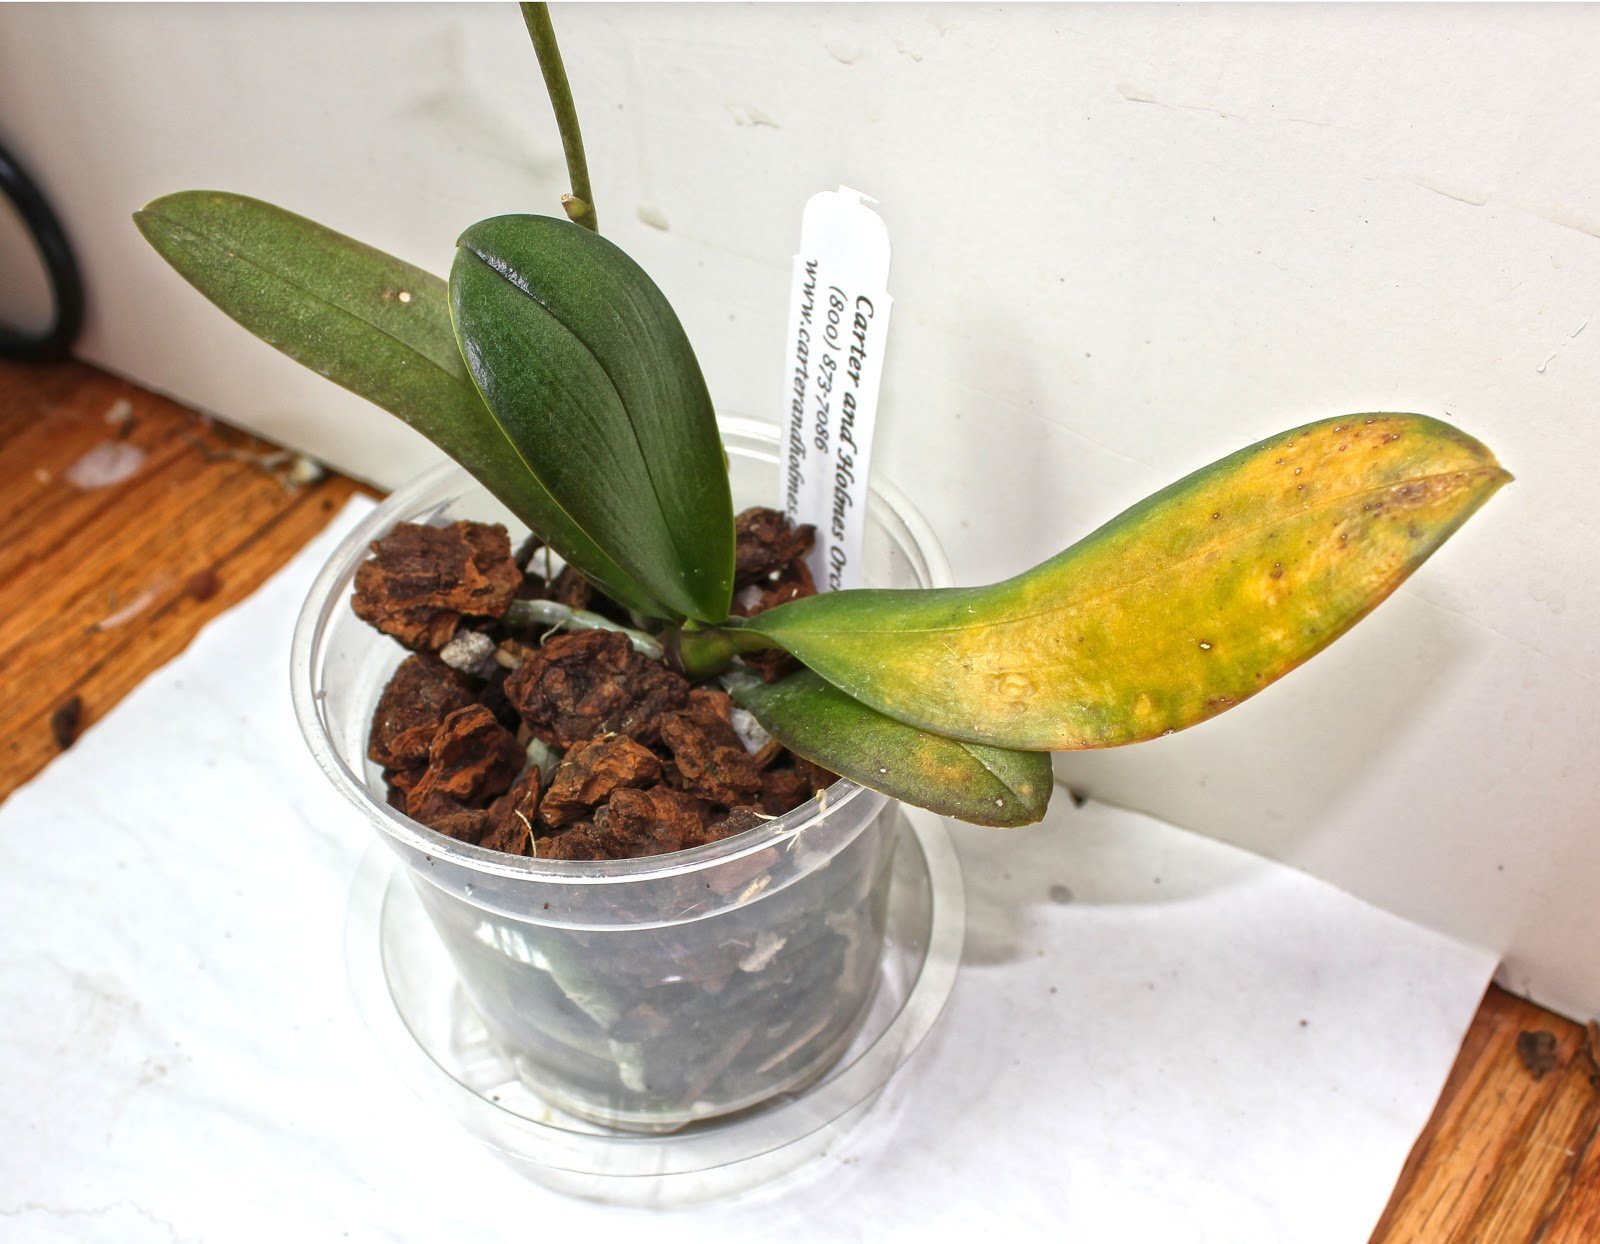 хлороз на орхидеях фото